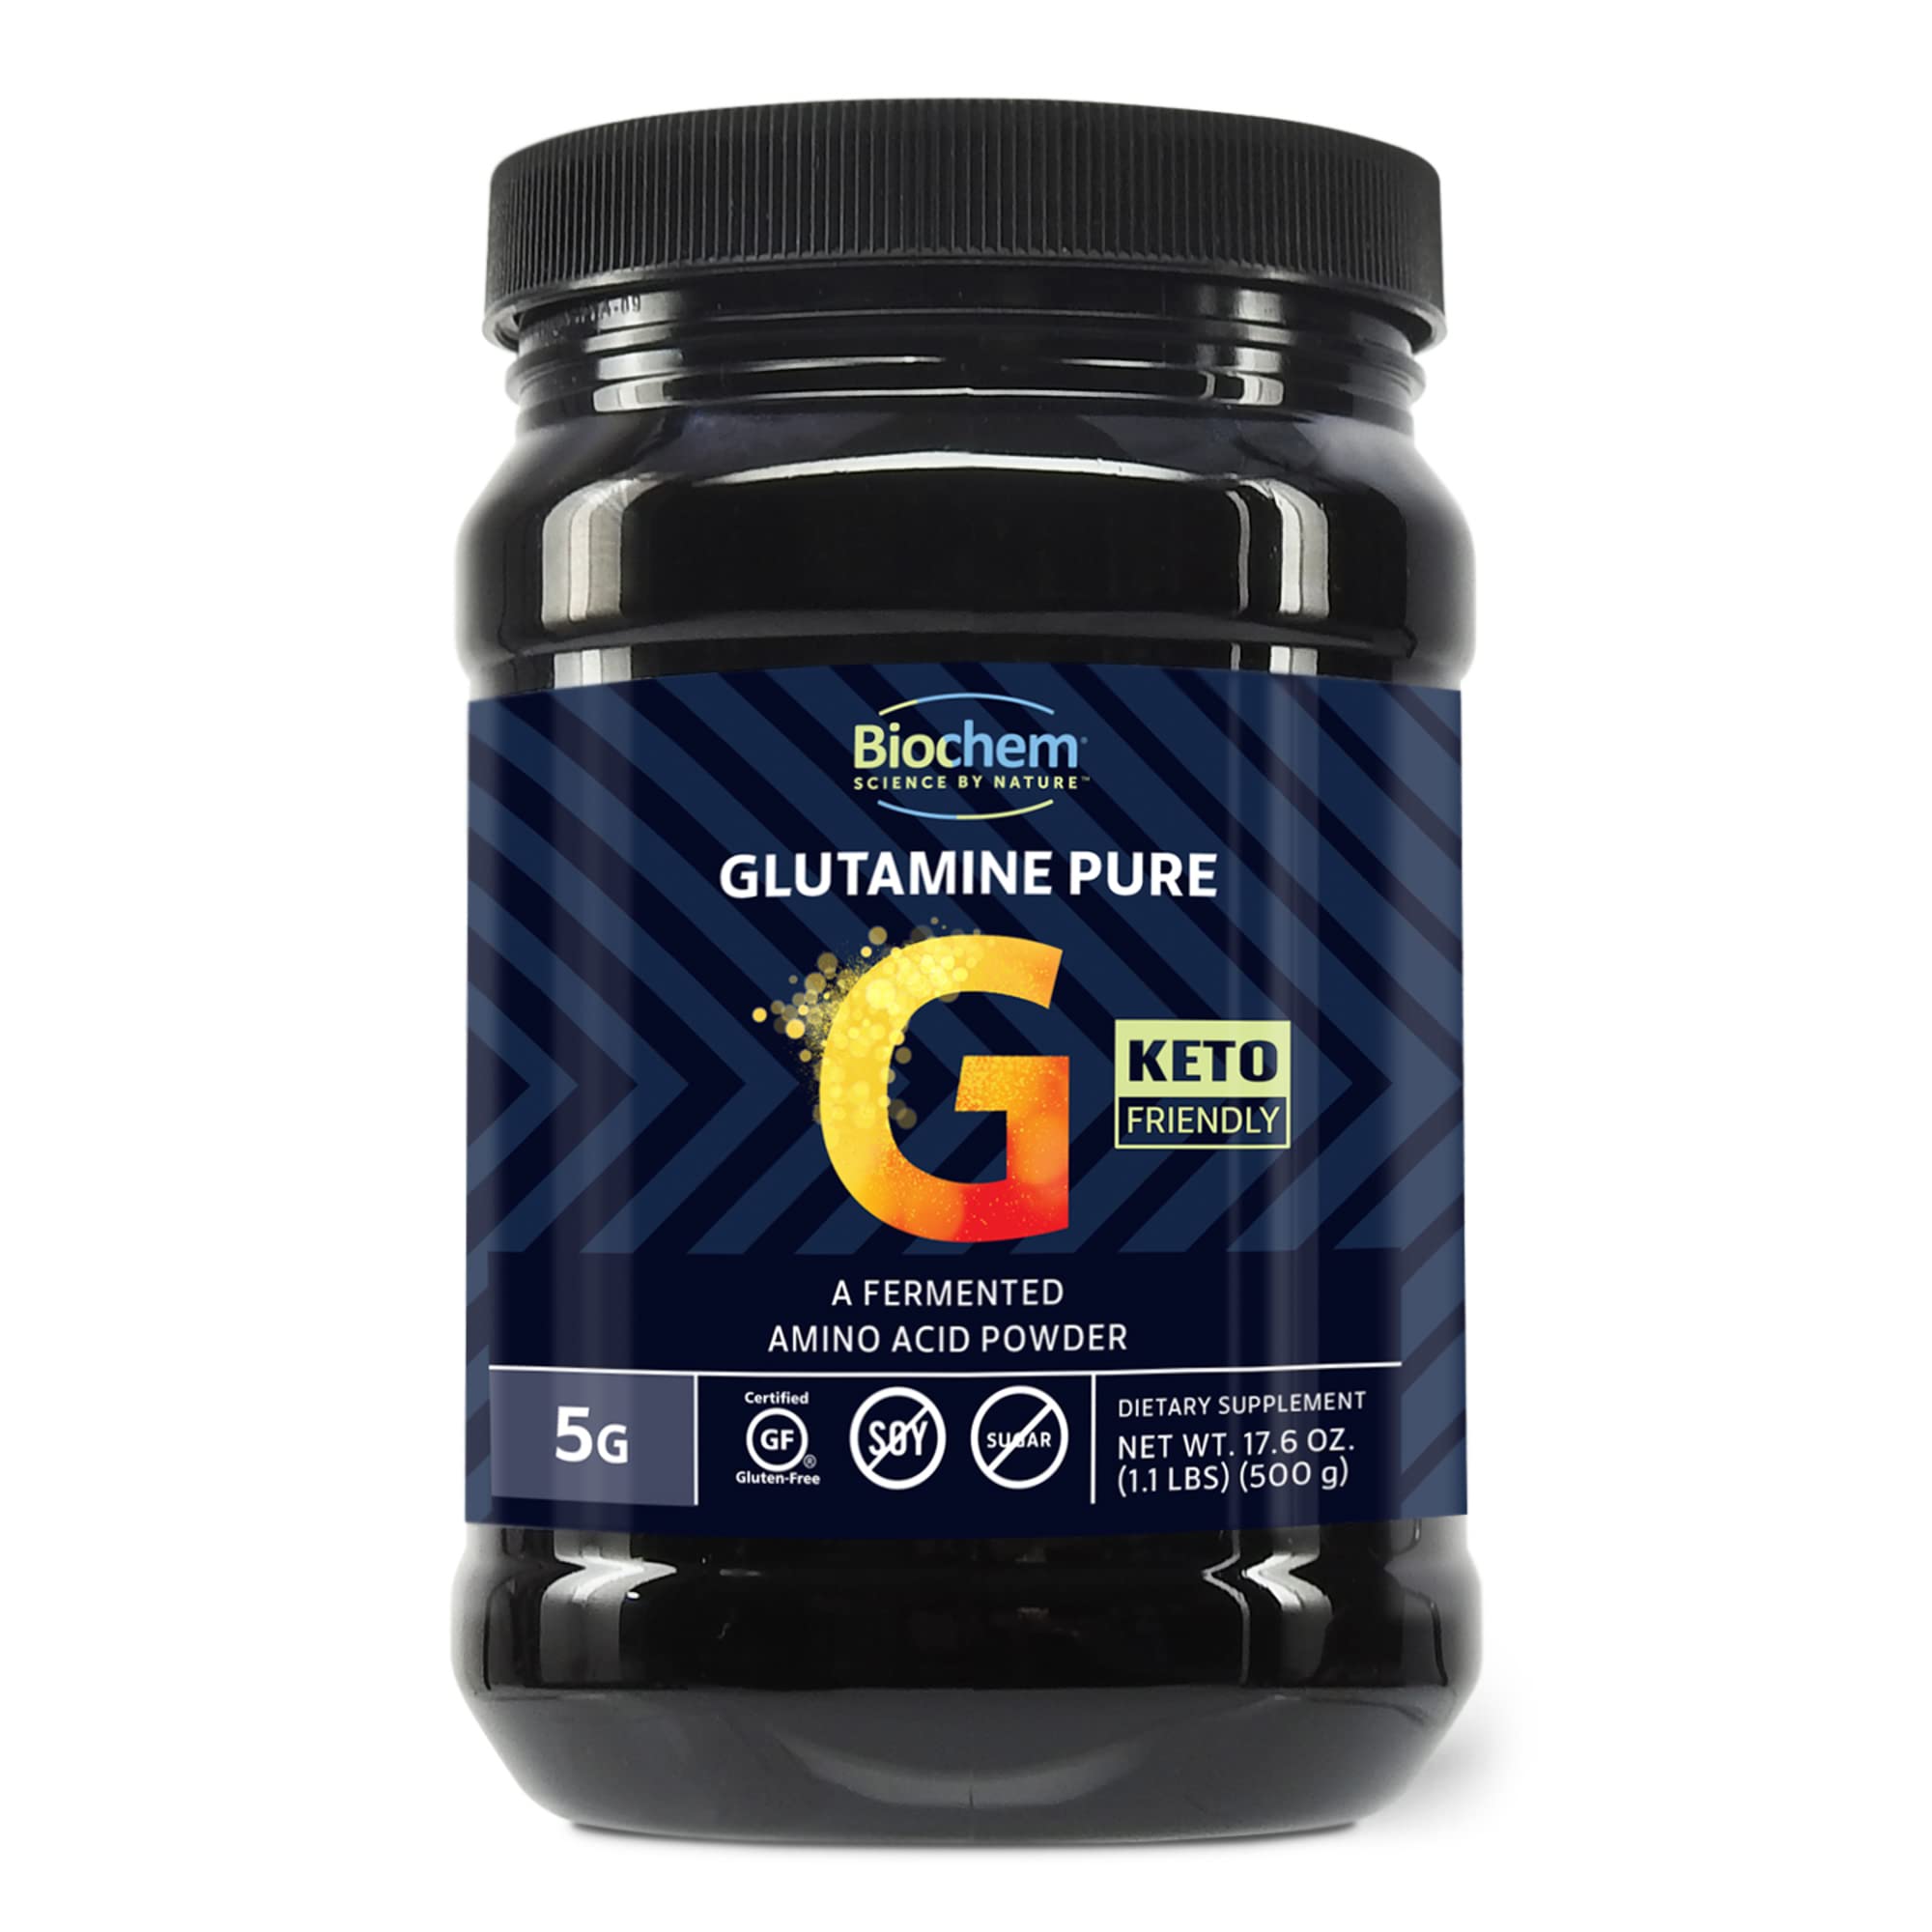 Biochem, Glutamine Pure Powder, 5g of L-Glutamine to Support Muscle Recovery, 17.6 oz